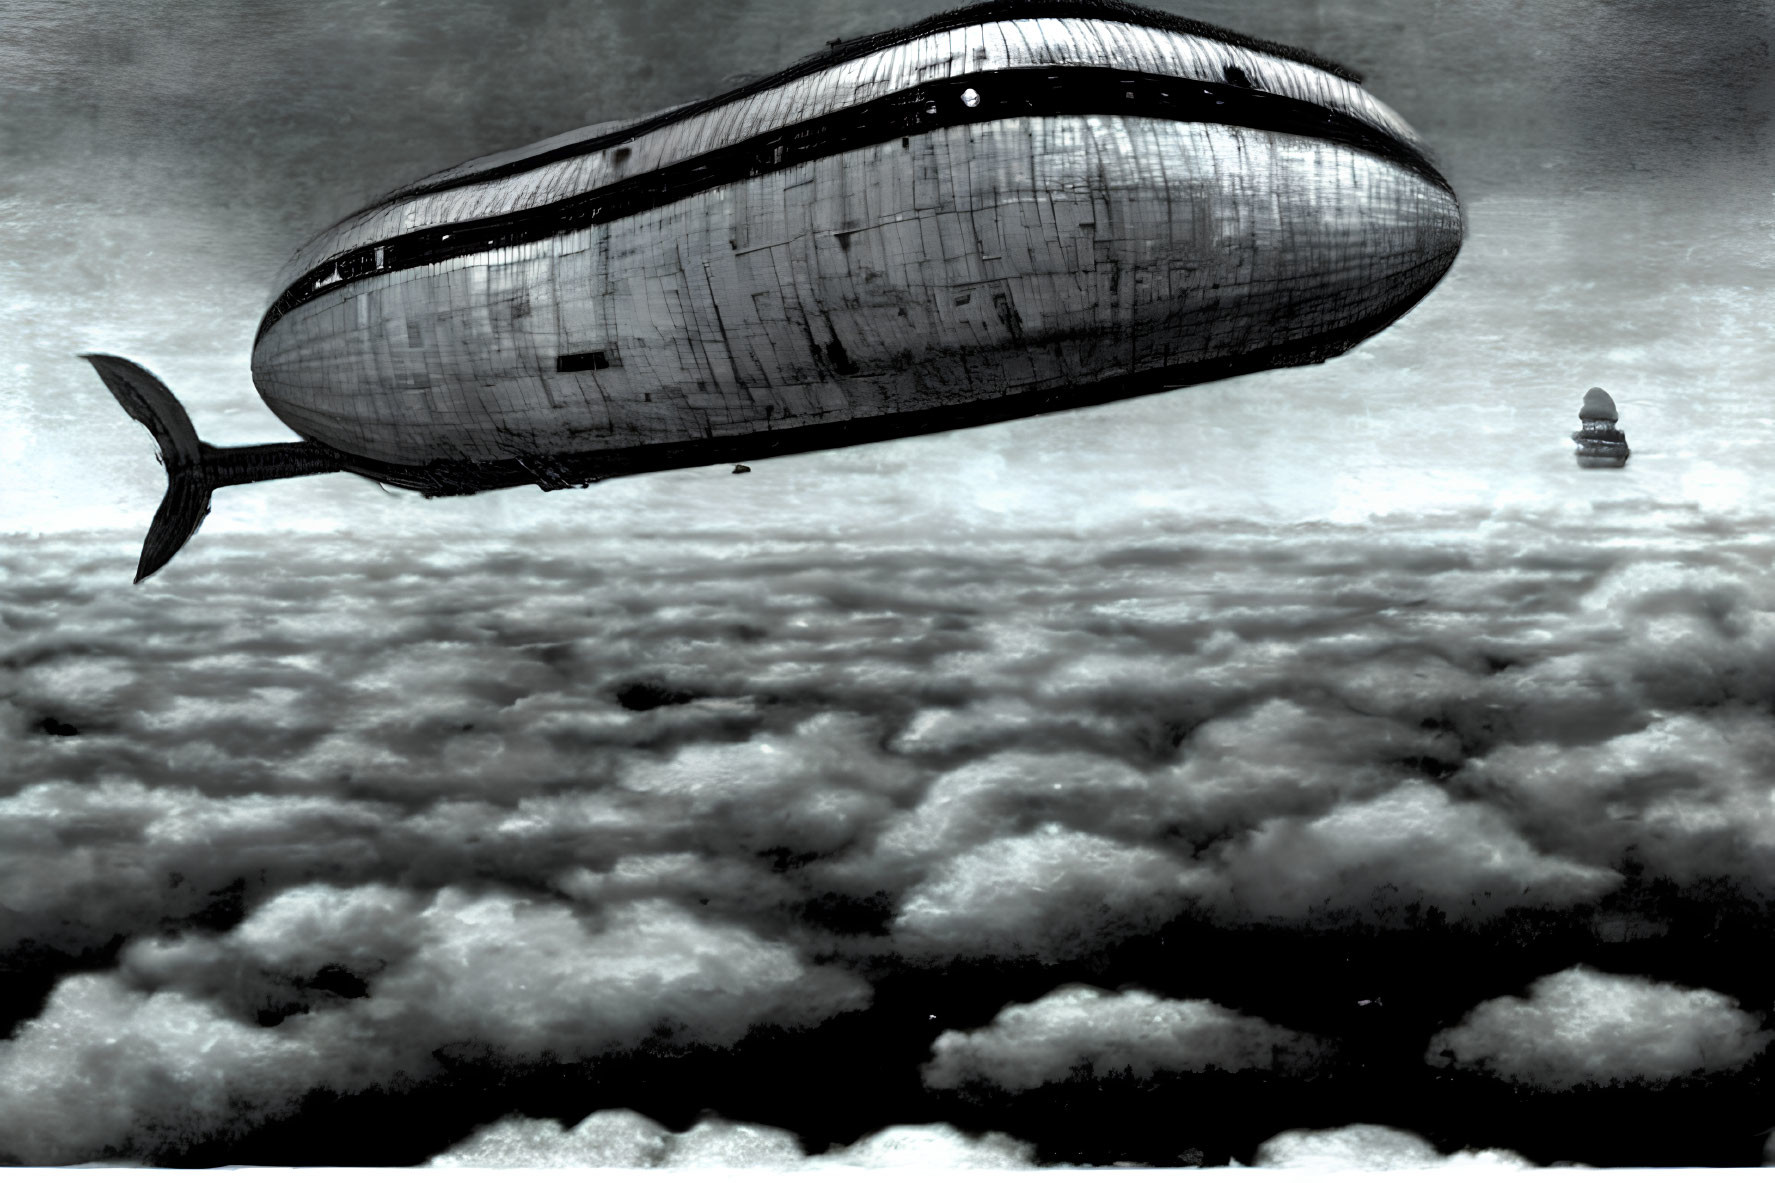 Retro-futuristic airship over cloudy sea under dark sky